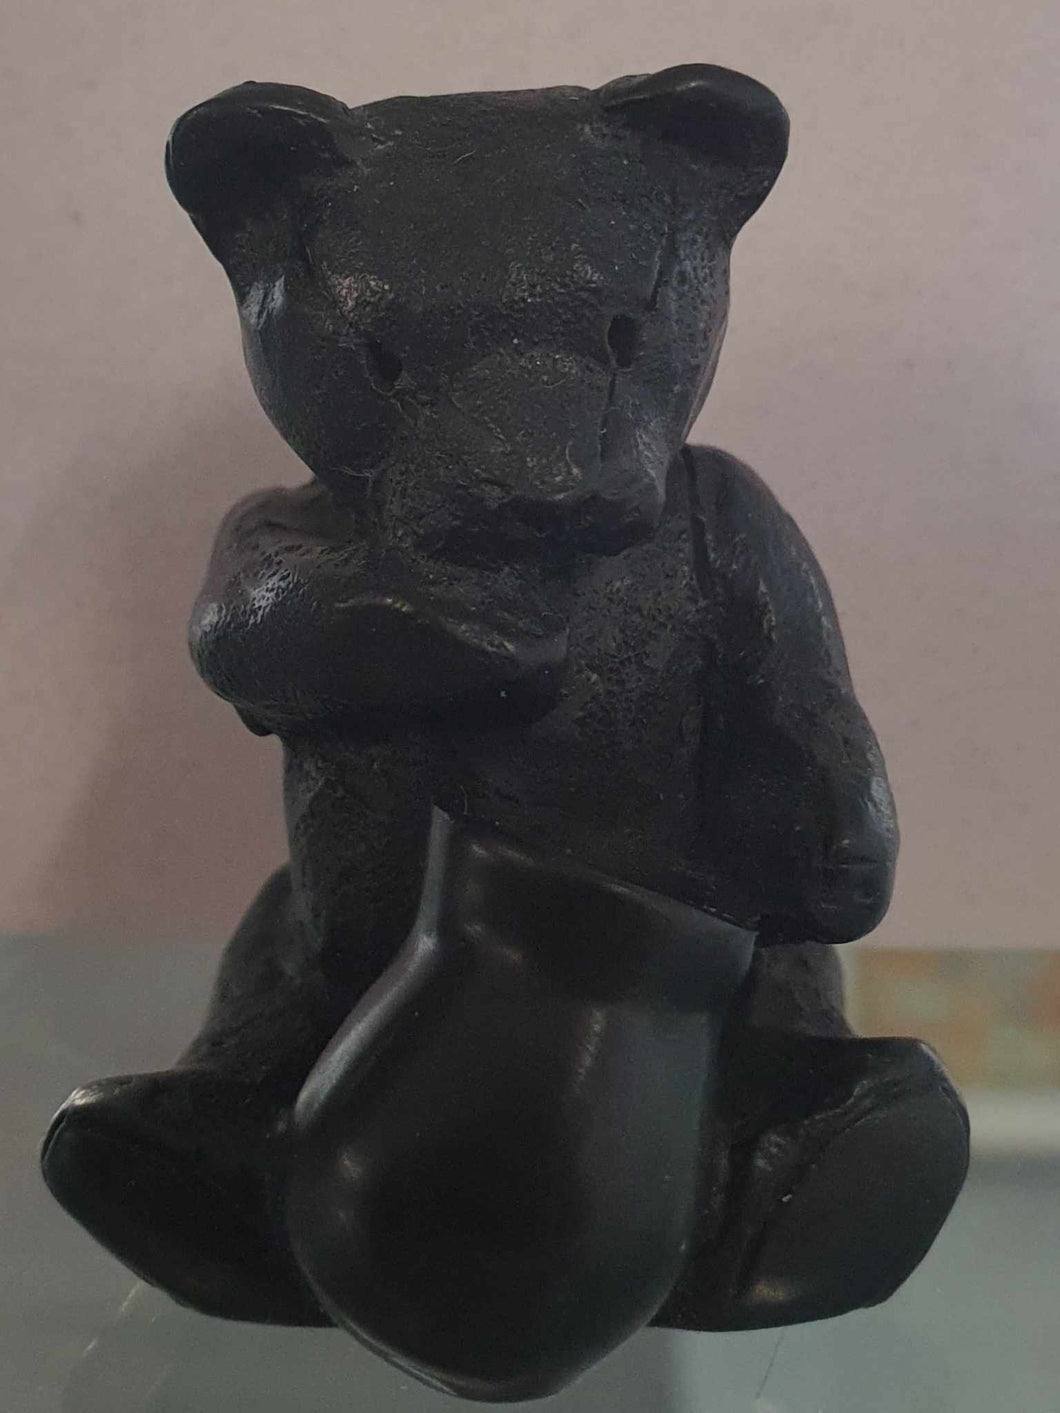 Black Teddy with honey pot.